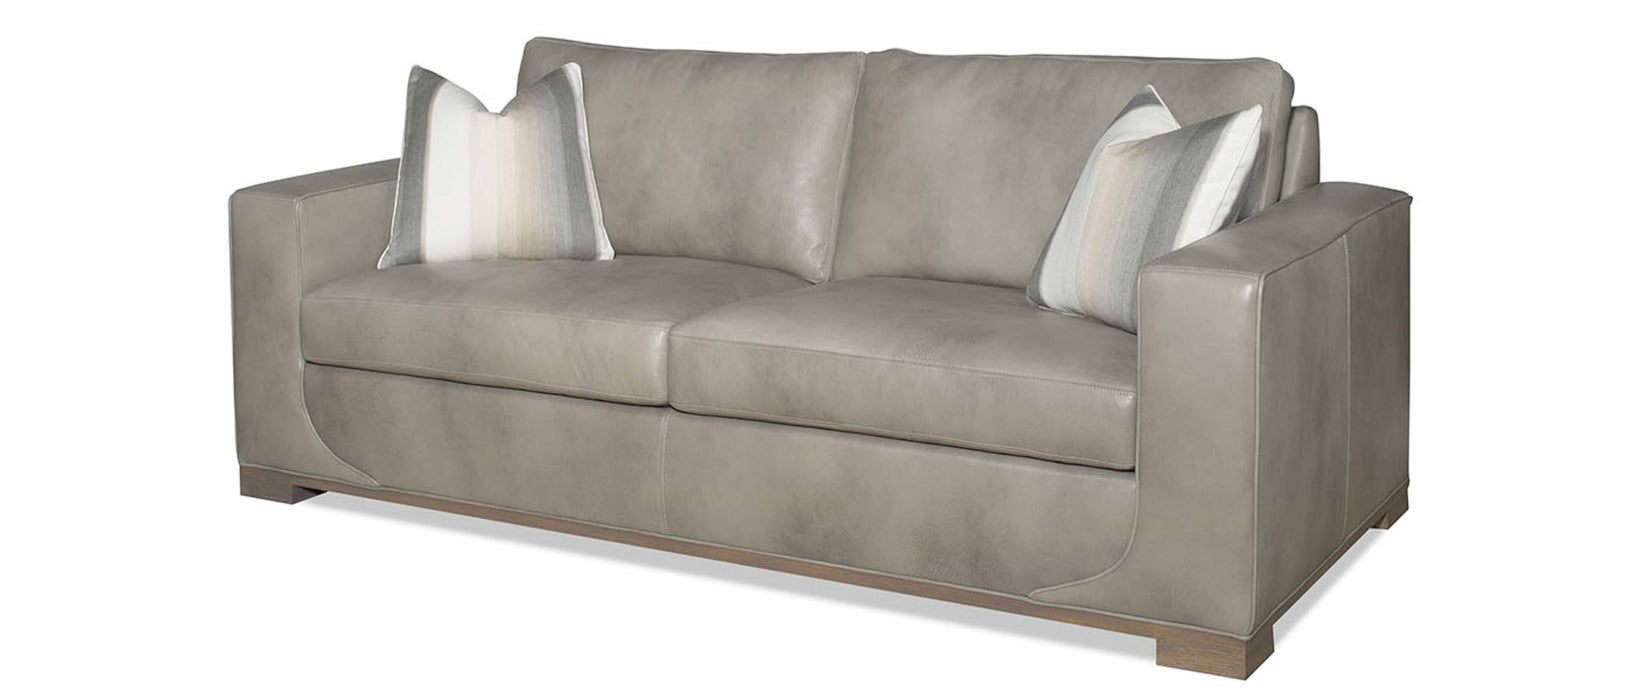 Maybank Leather Queen Size Sofa Sleeper